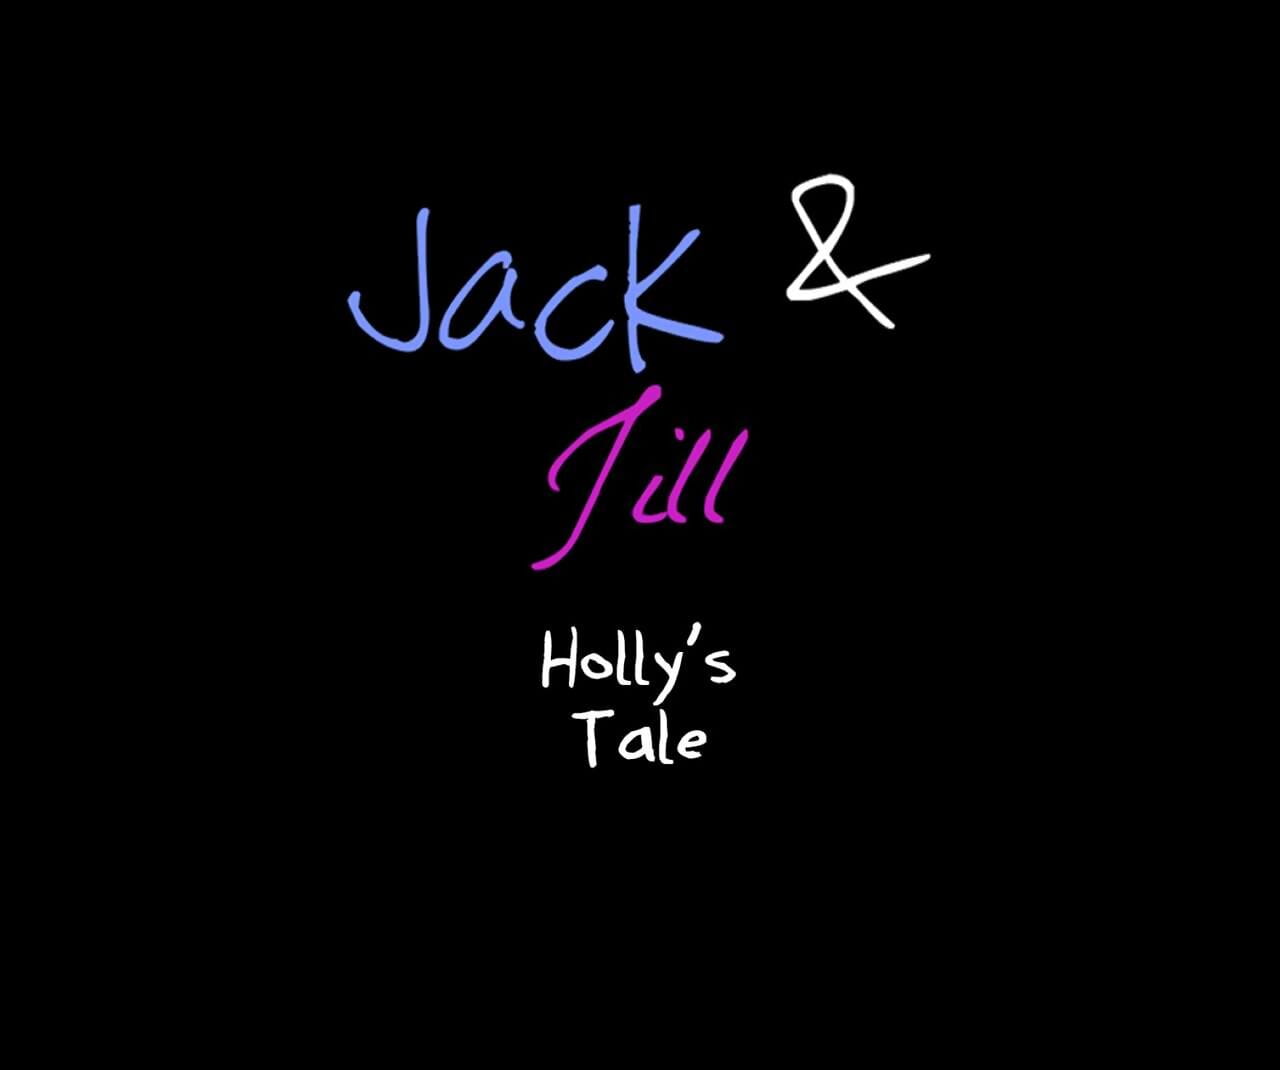 jack ve jill Hollys masal page 1